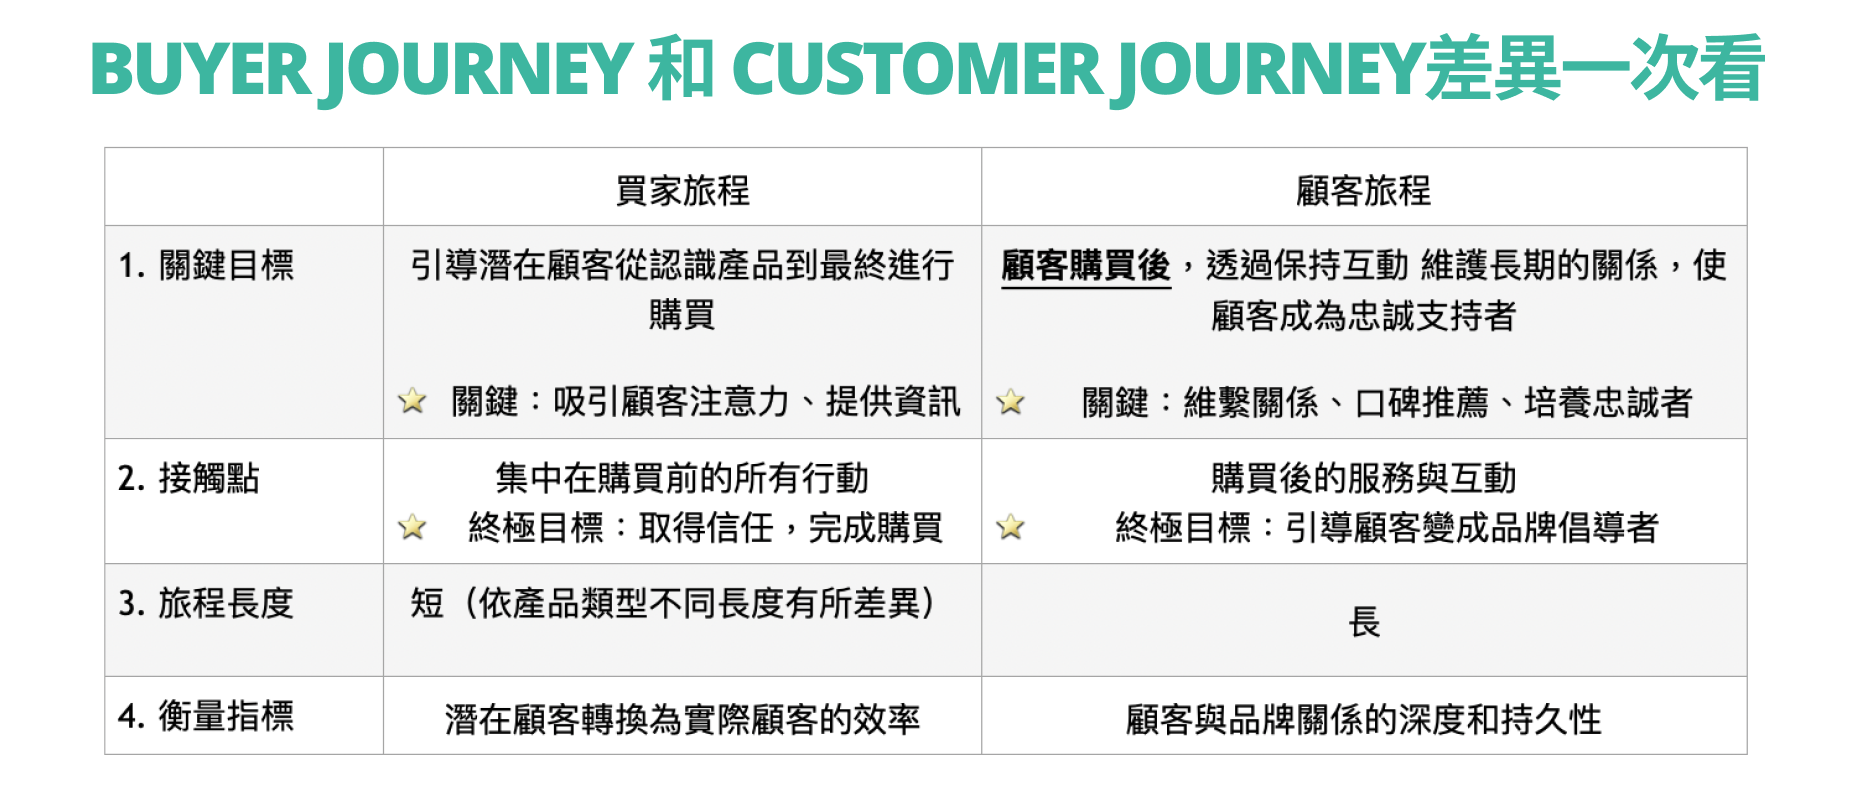 BuyerJourney 和 Customer Journey差異